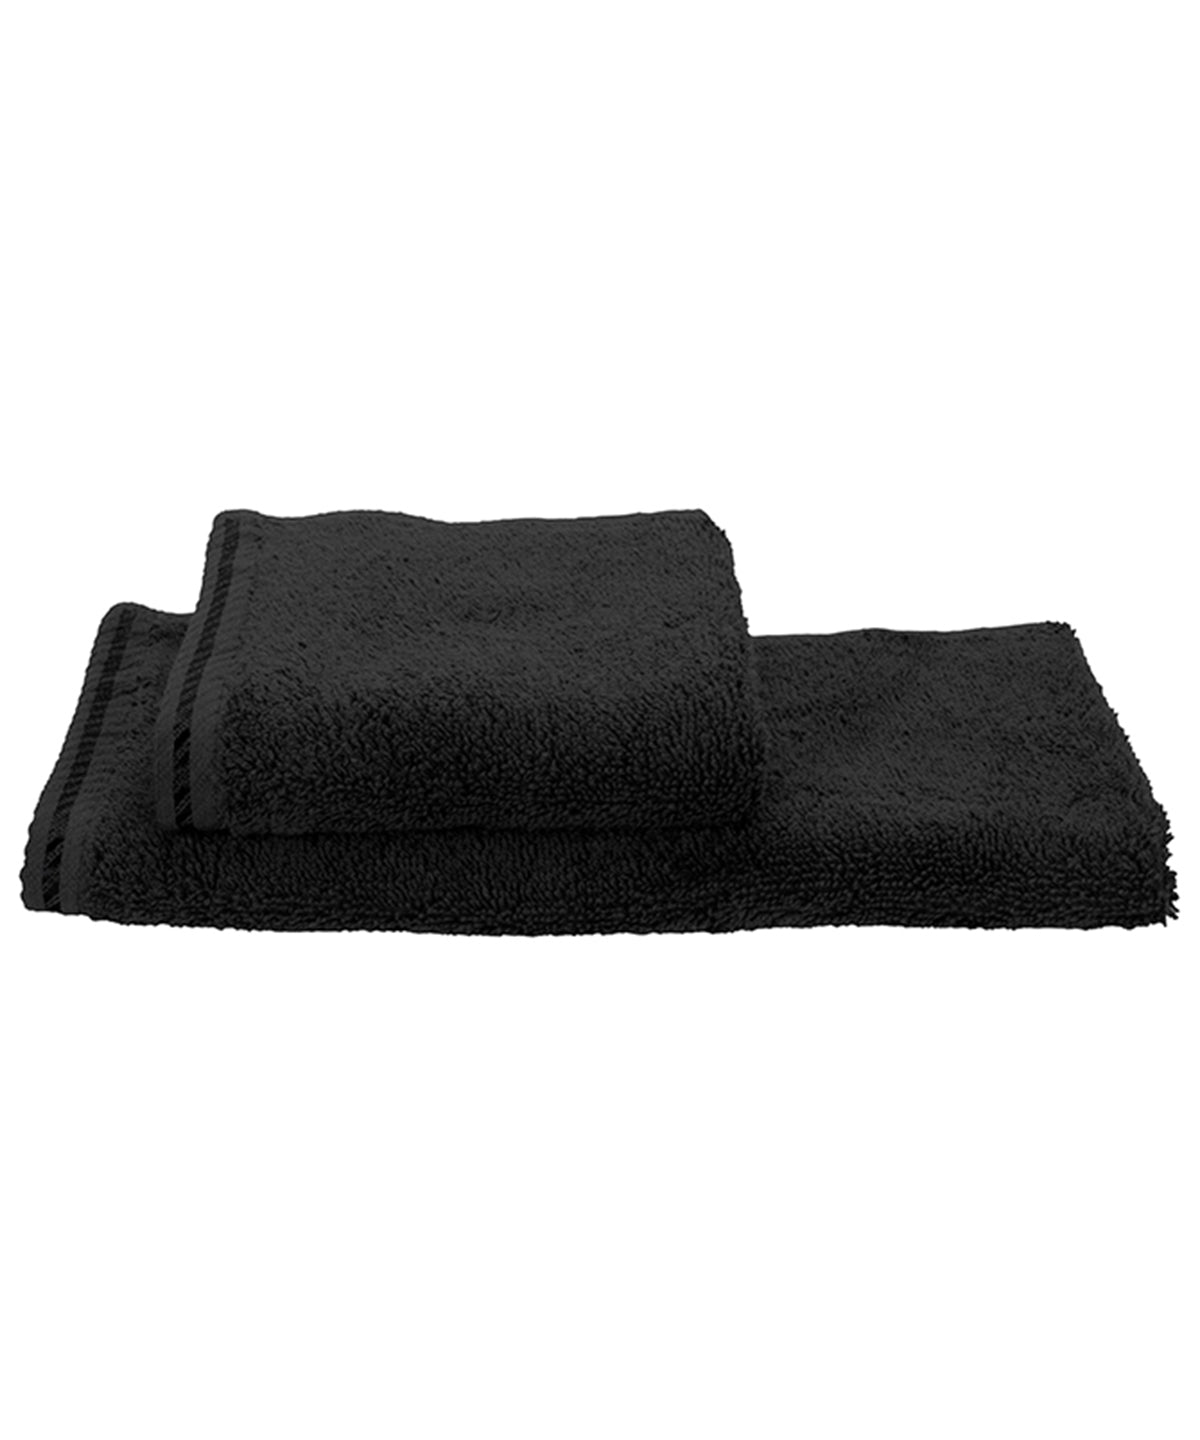 Personalised Towels - Black A&R Towels ARTG® Guest towel